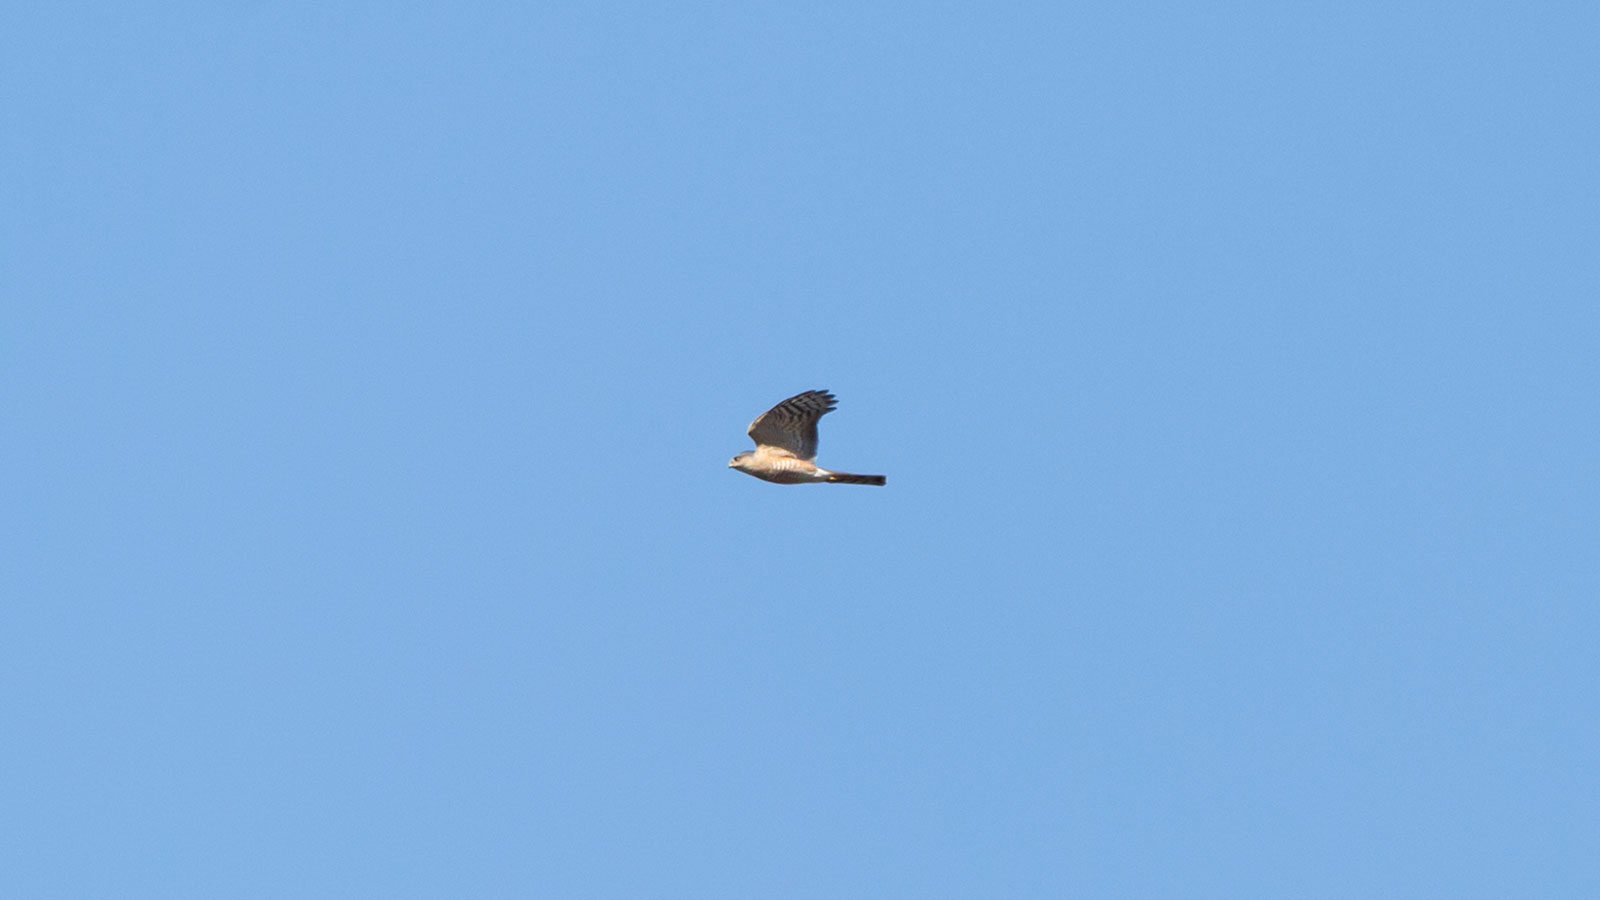 Sharp-shinned hawk flying through blue sky